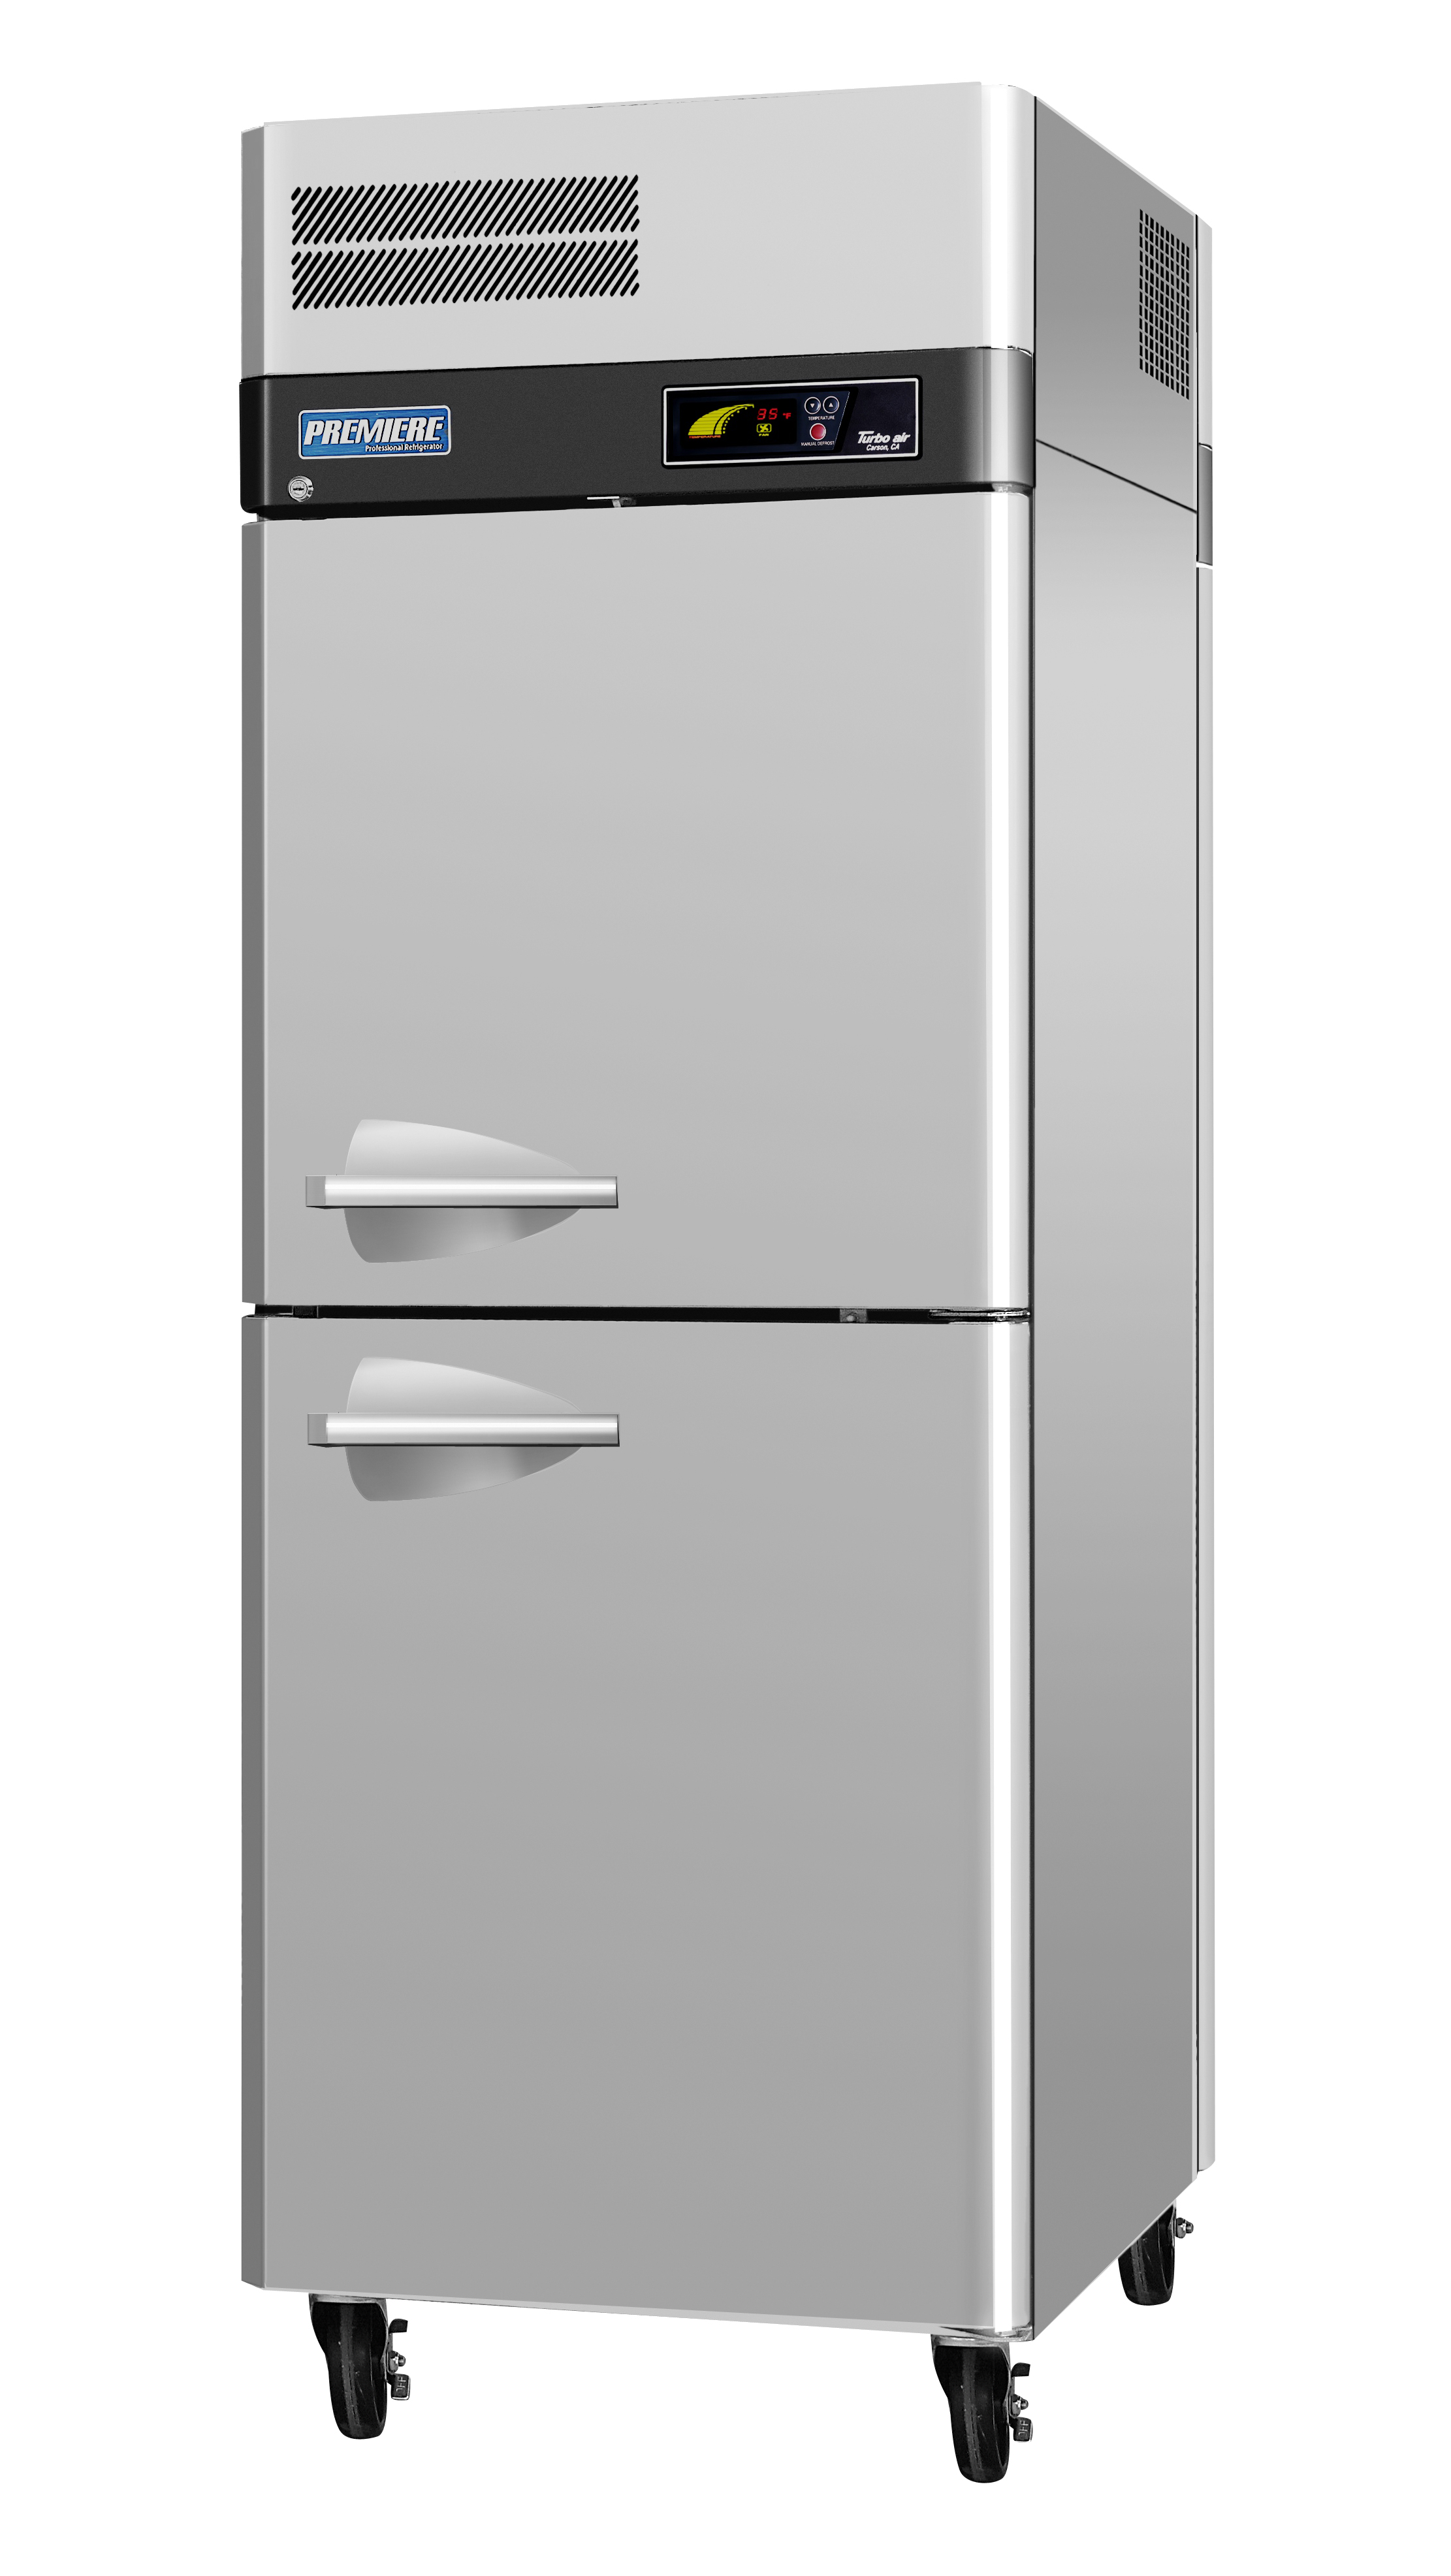 Premiere PRO Series Refrigerator, pass-thru, one-section